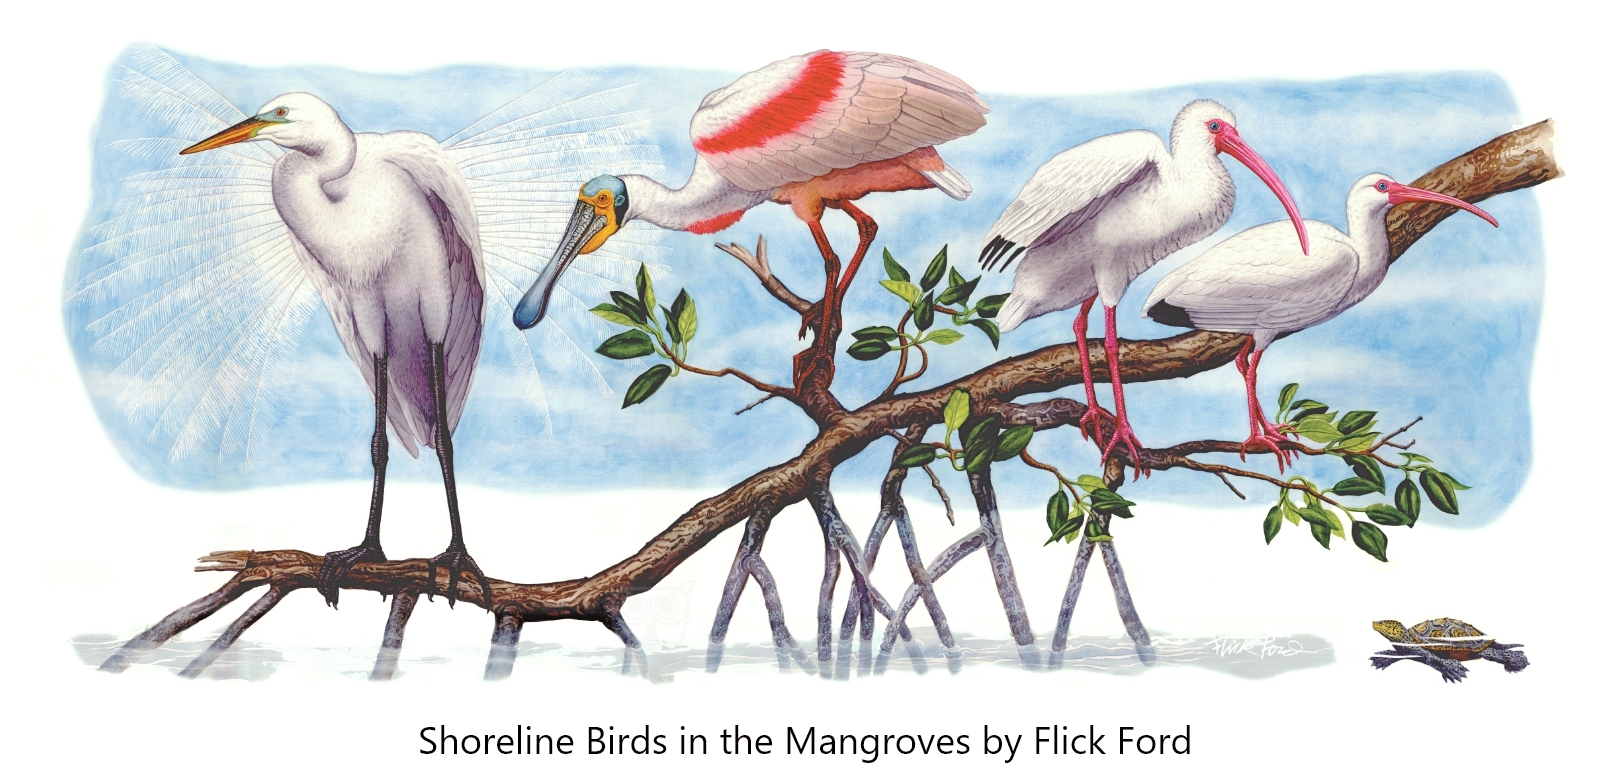 Shorebirds in the Mangroves